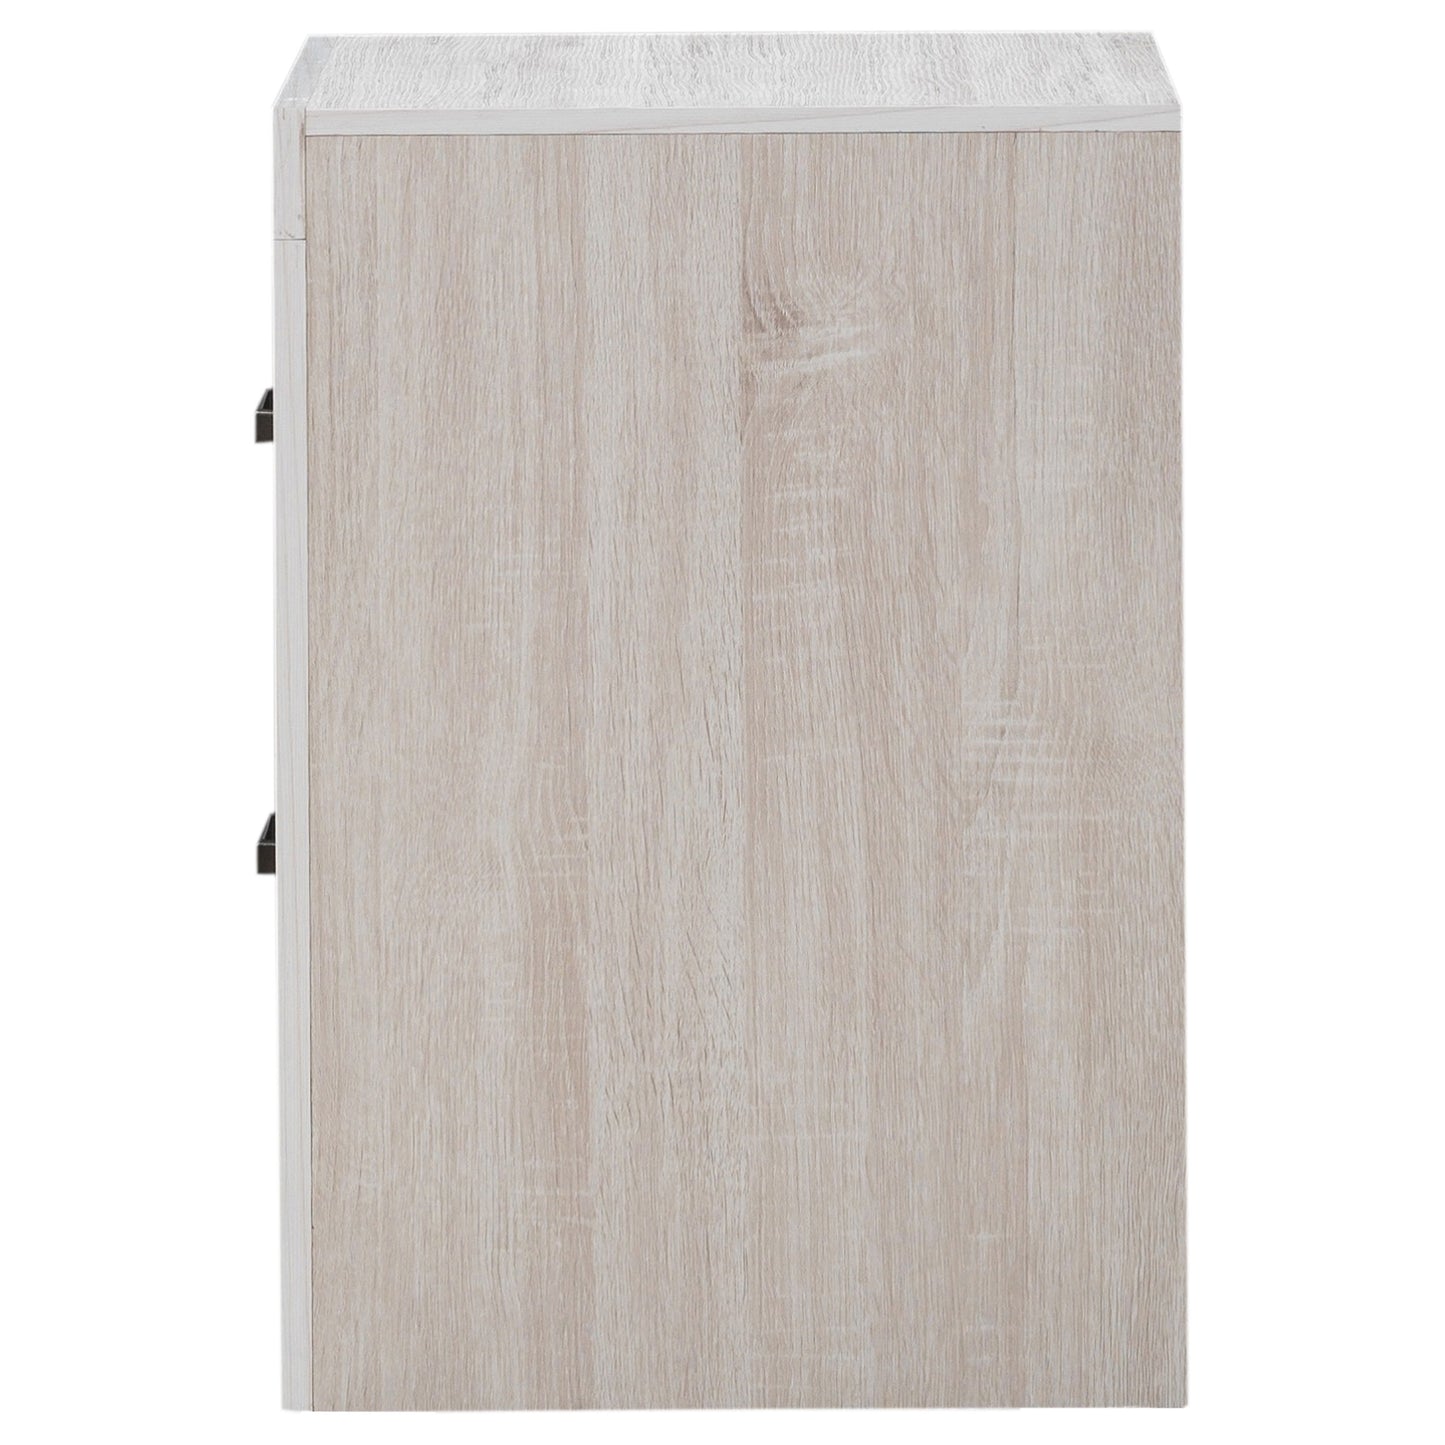 Brantford 2-drawer Nightstand Coastal White